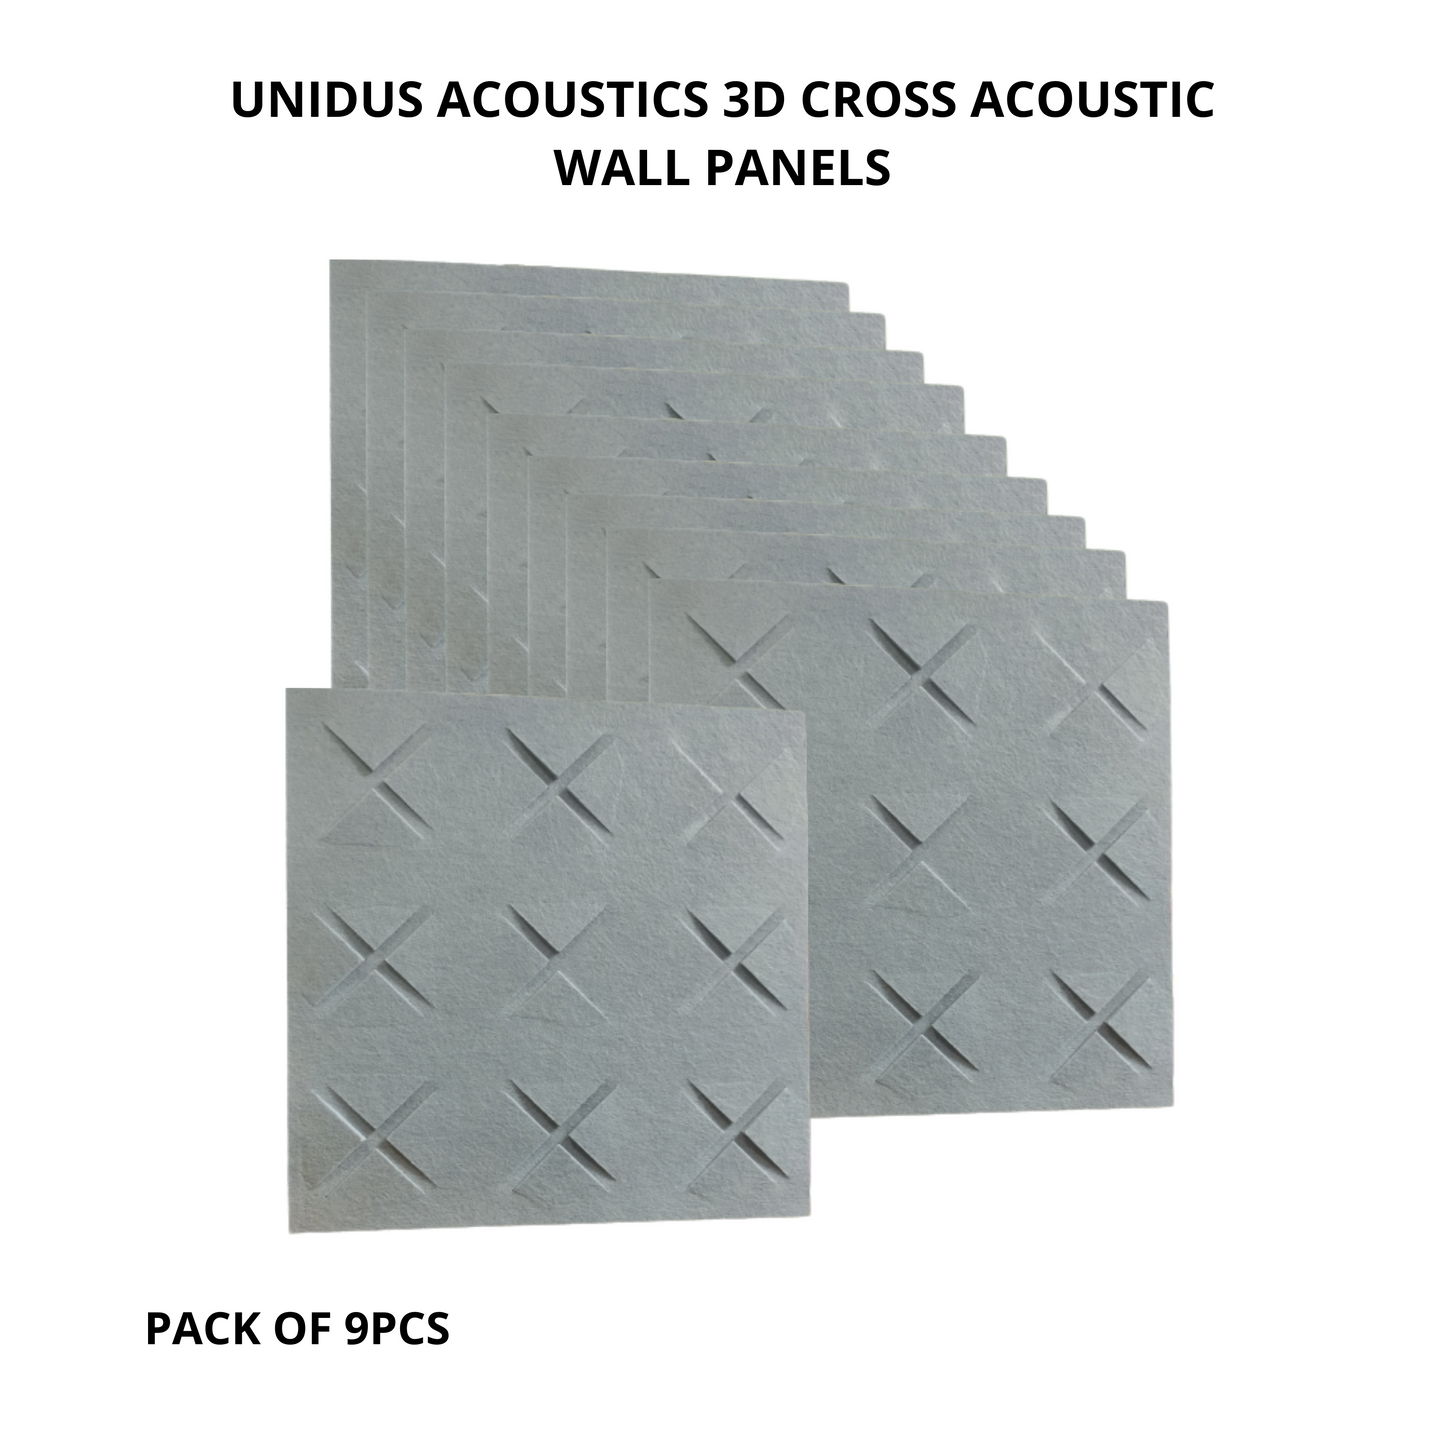 3D Cross Acoustic Wall Panels, 12"x12"x 9mm, Misty Grey Soundproof Panels | Acoustic Panel for Soundproofing